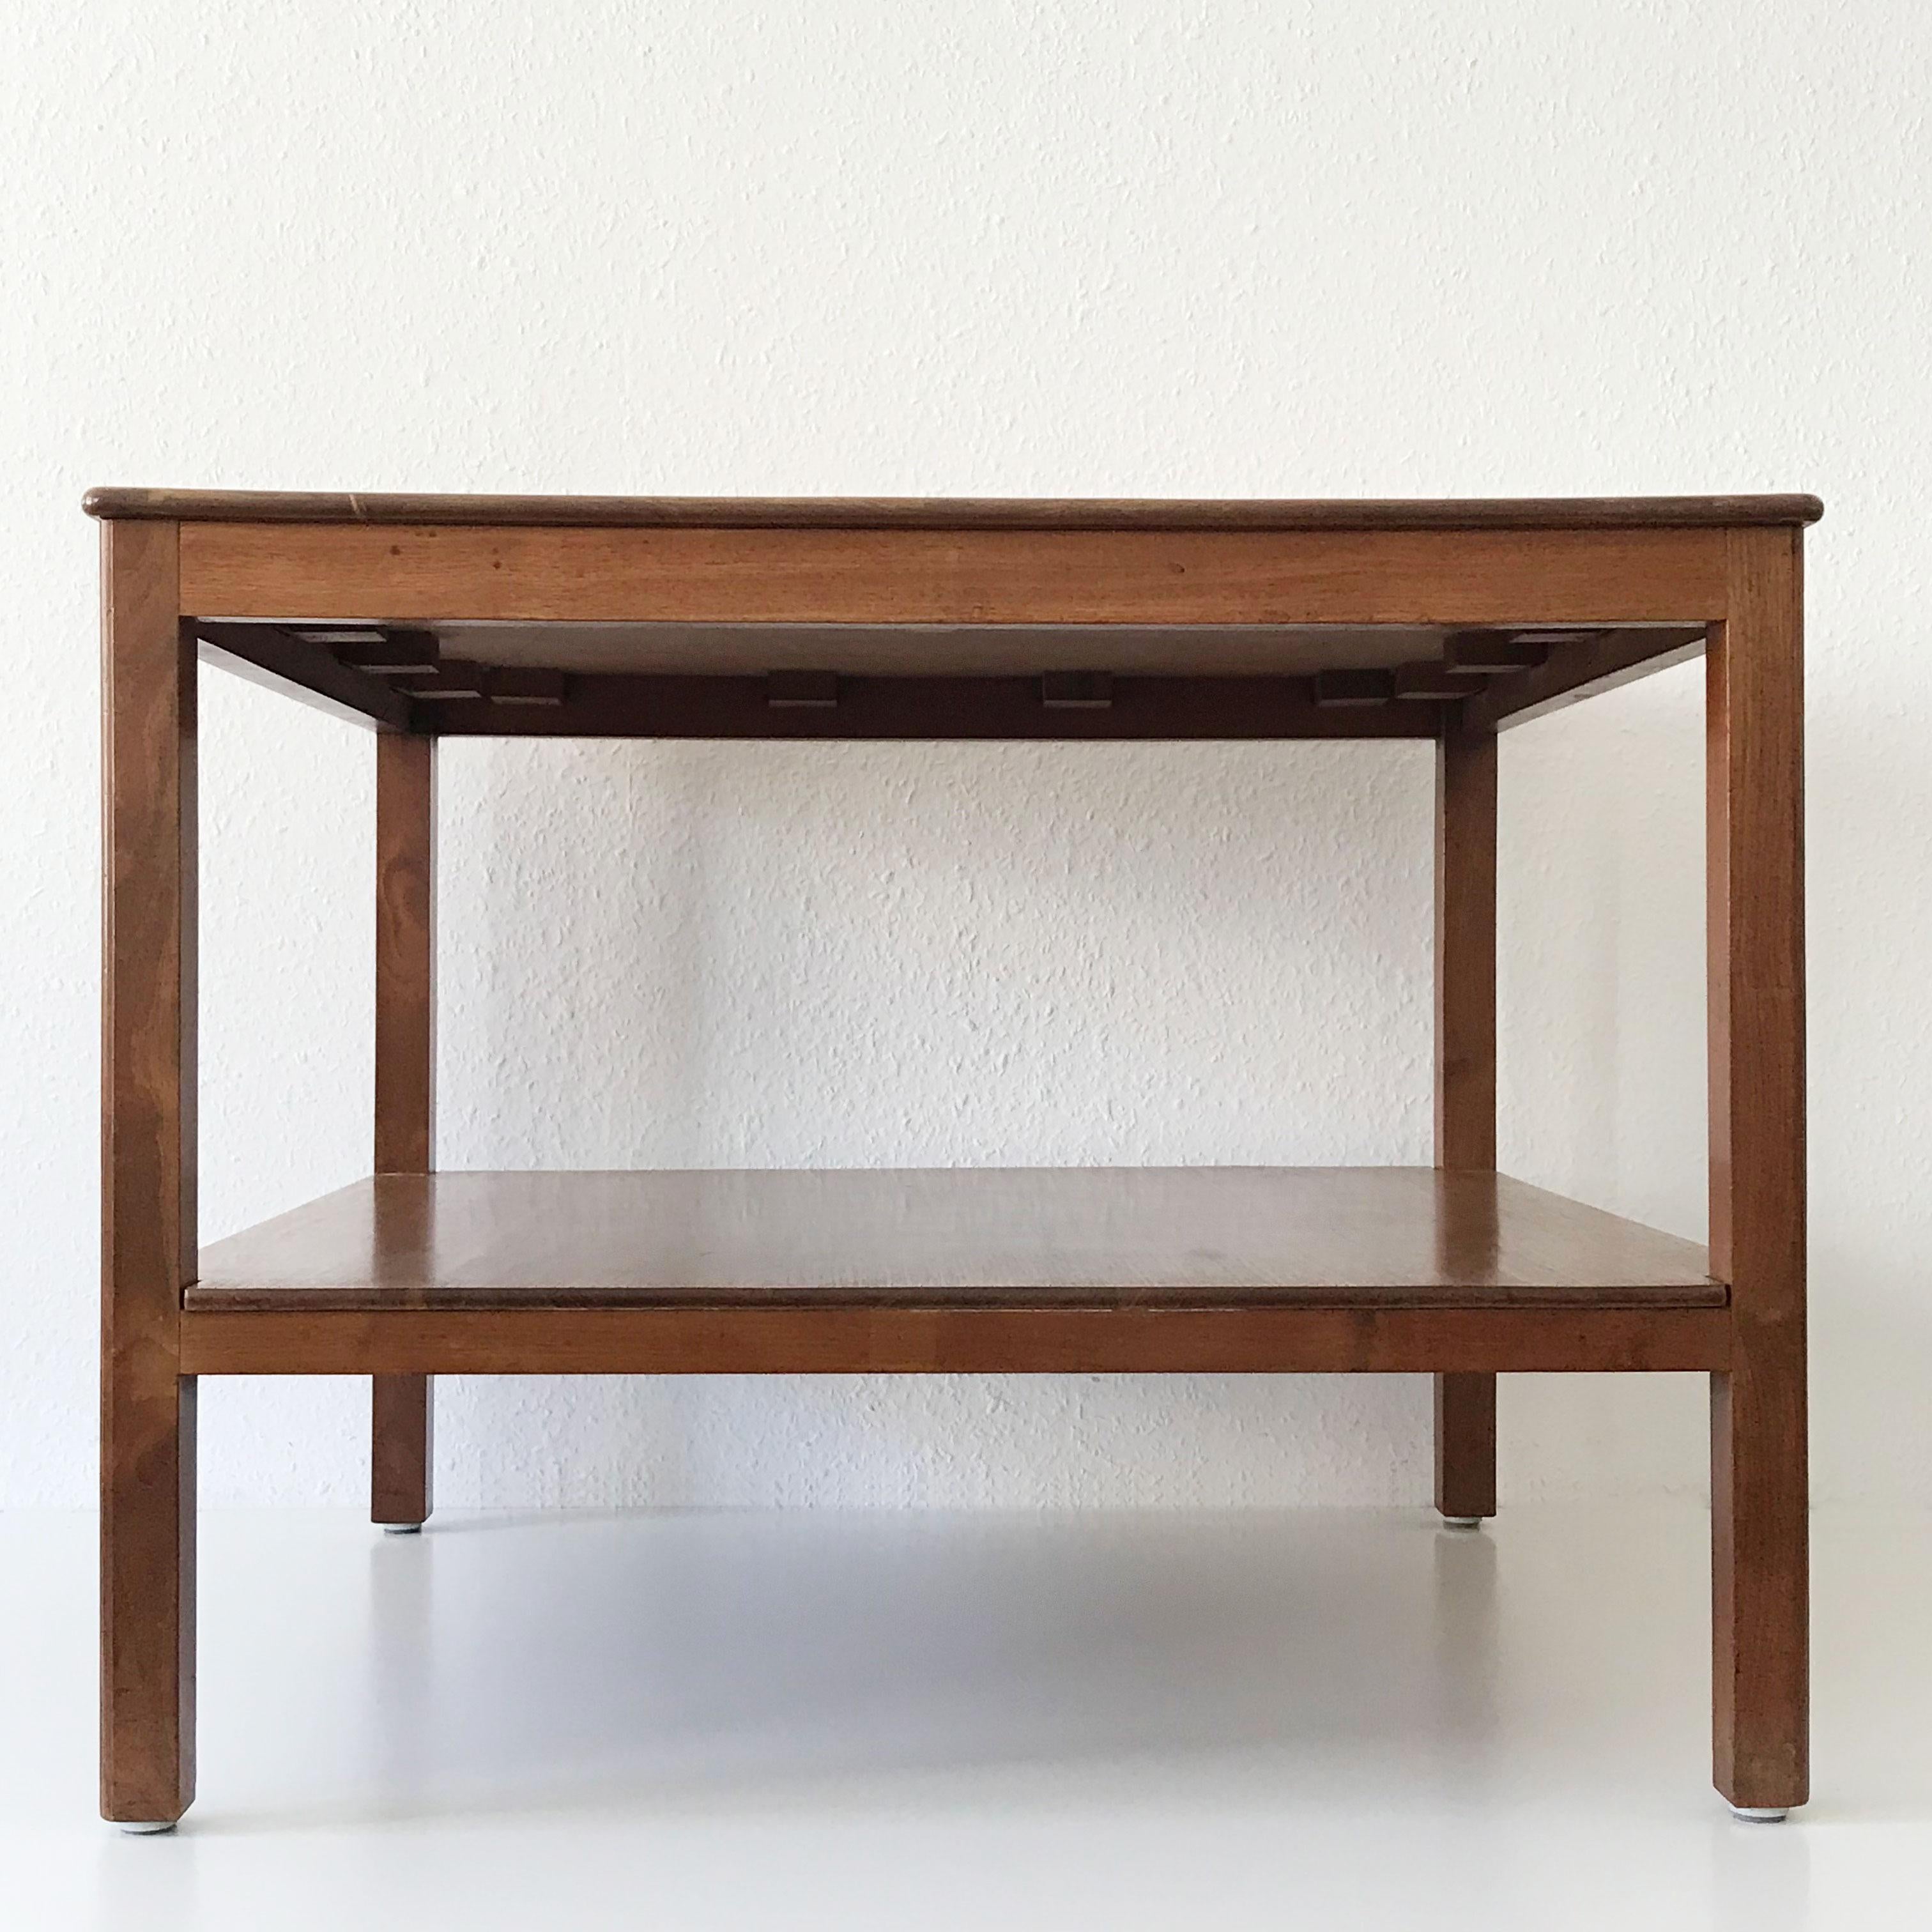 Bauhaus Minimalistic Coffee Mahogany Table by Kaare Klint for Rud Rasmussen Denmark 1934 For Sale